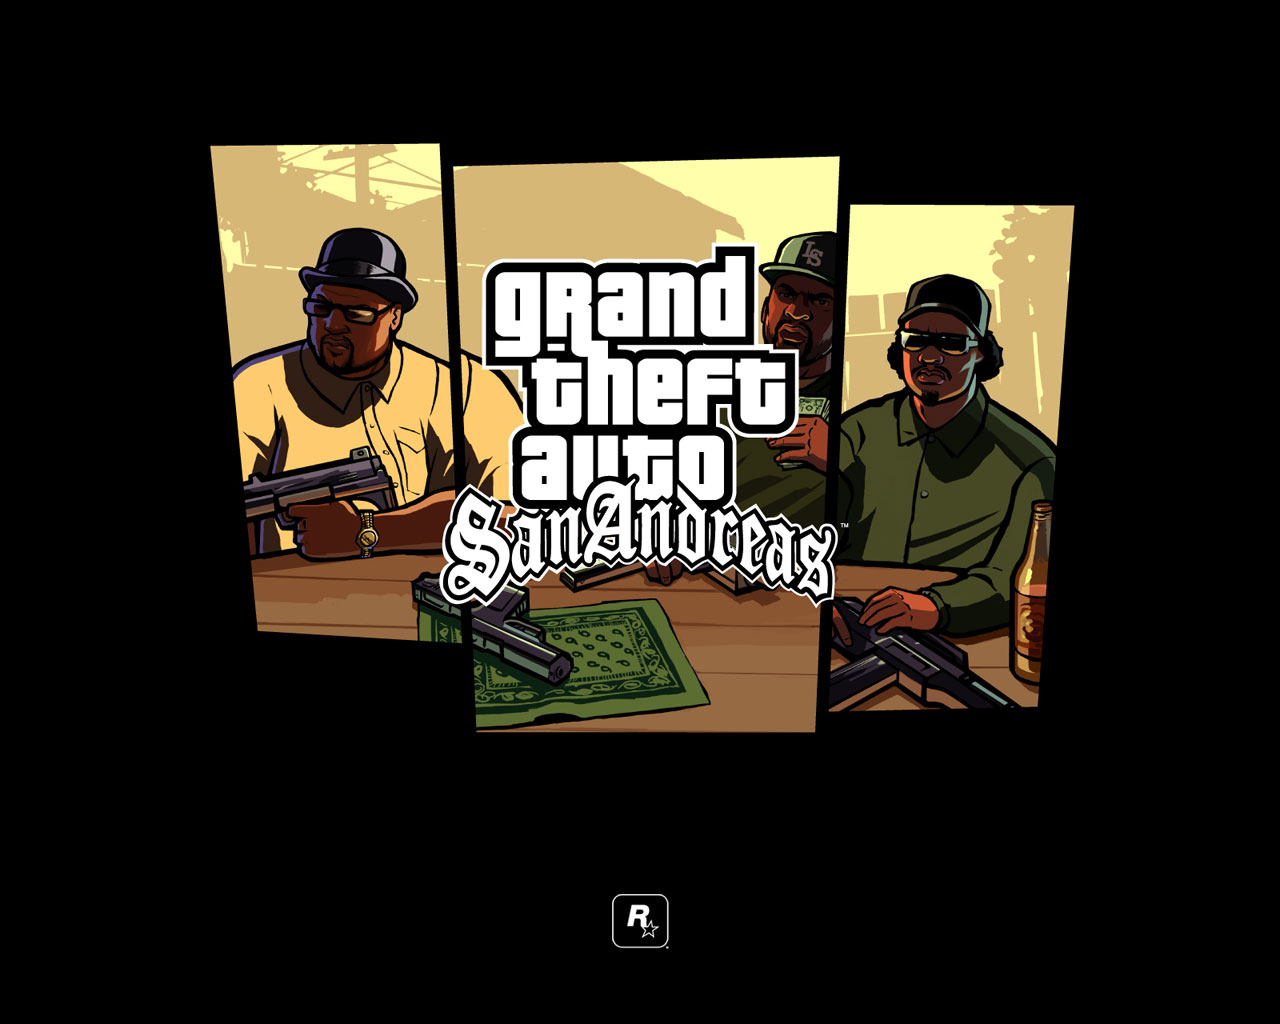 Grand Theft Auto San Andreas Official Desktops